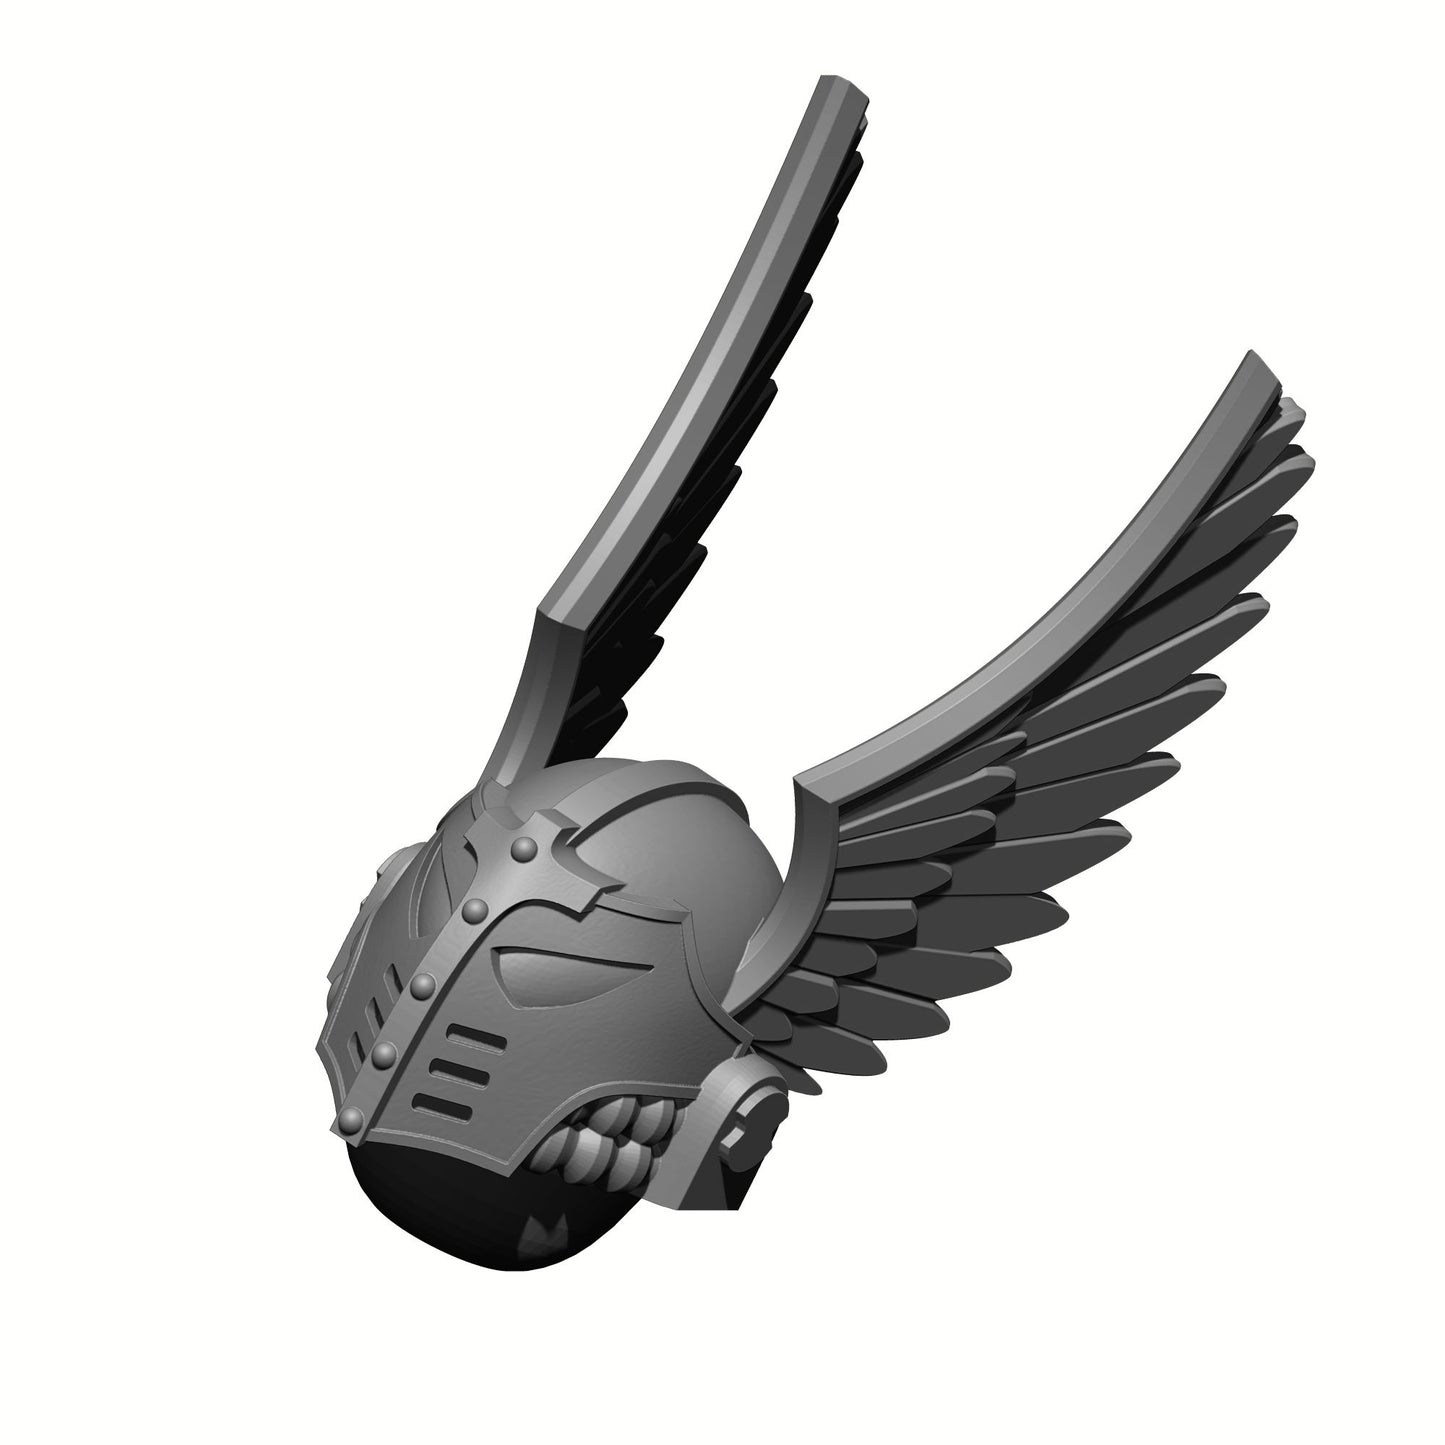 Angels Grimm 30k Winged Helm for JoyToy Dark Angels 1:18 Scale Action Figures